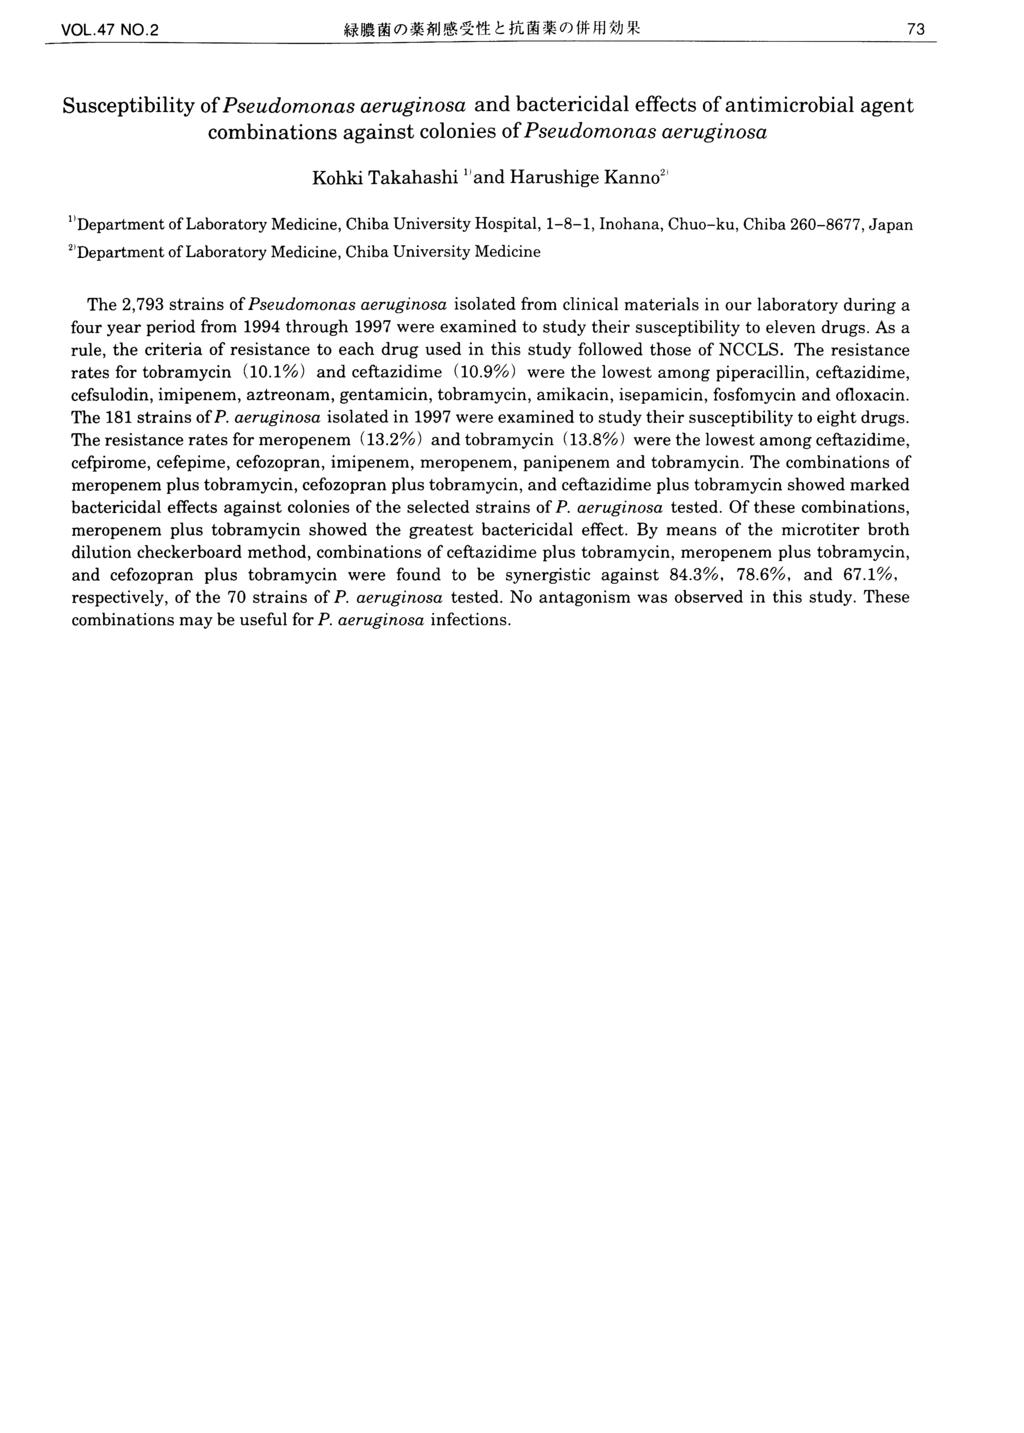 Susceptibility of Pseudomonas aeruginosa and bactericidal effects of antimicrobial agent combinations against colonies of Pseudomonas aeruginosa Kohki Takahashi1) and Harushige Kanno2) Department of